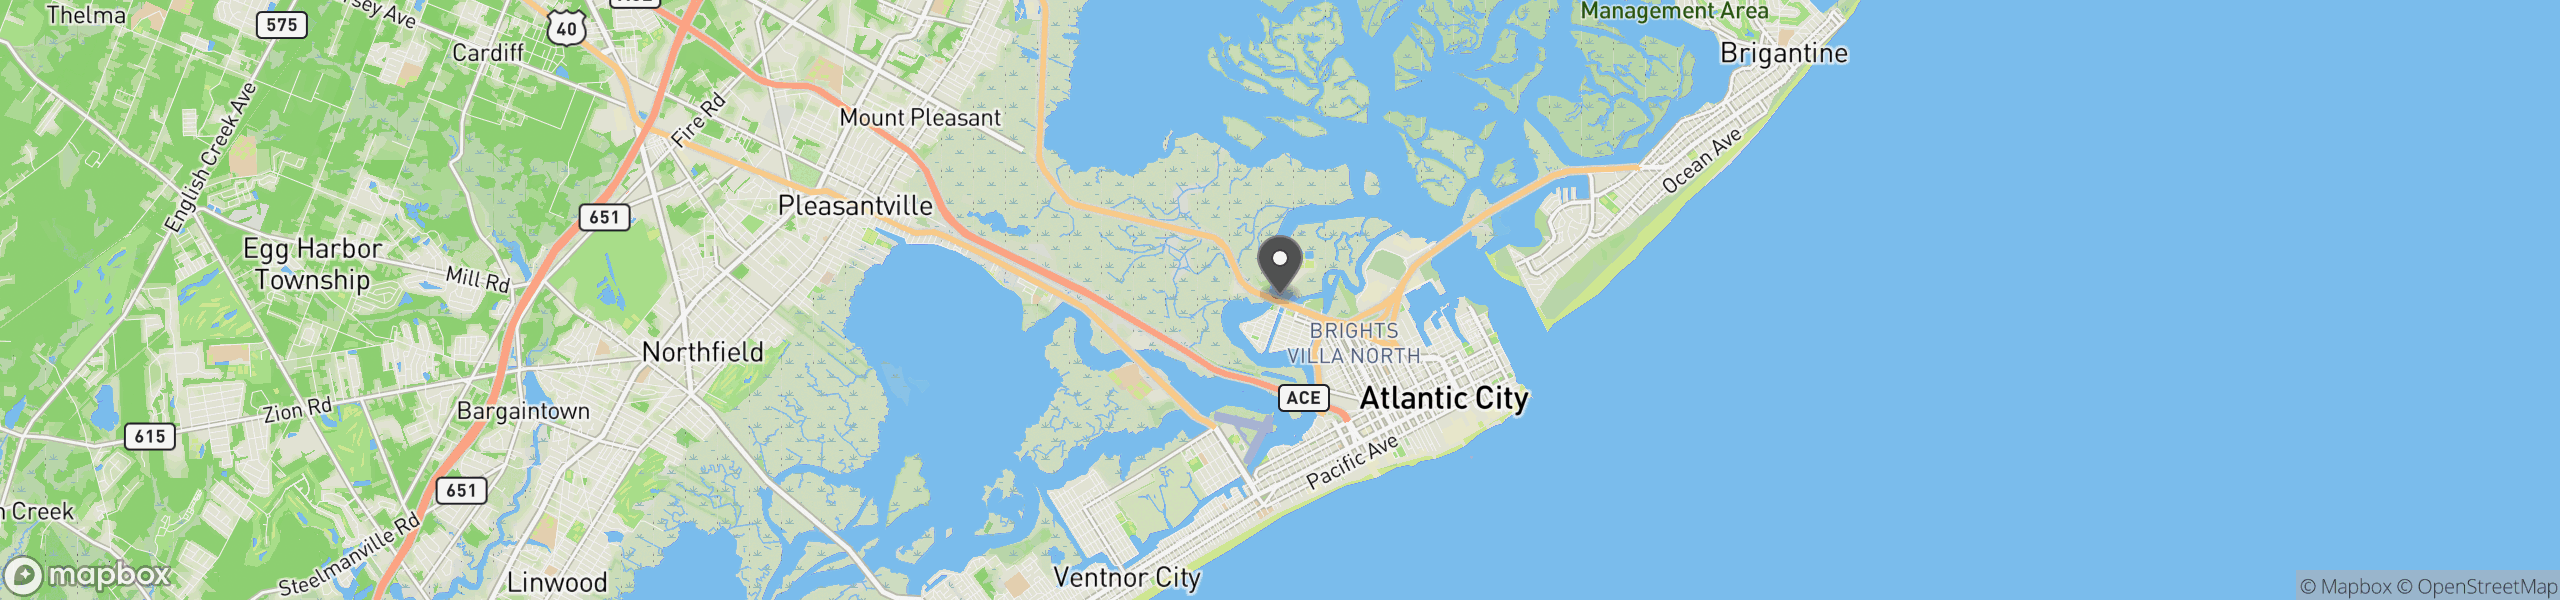 Atlantic City, NJ 08401